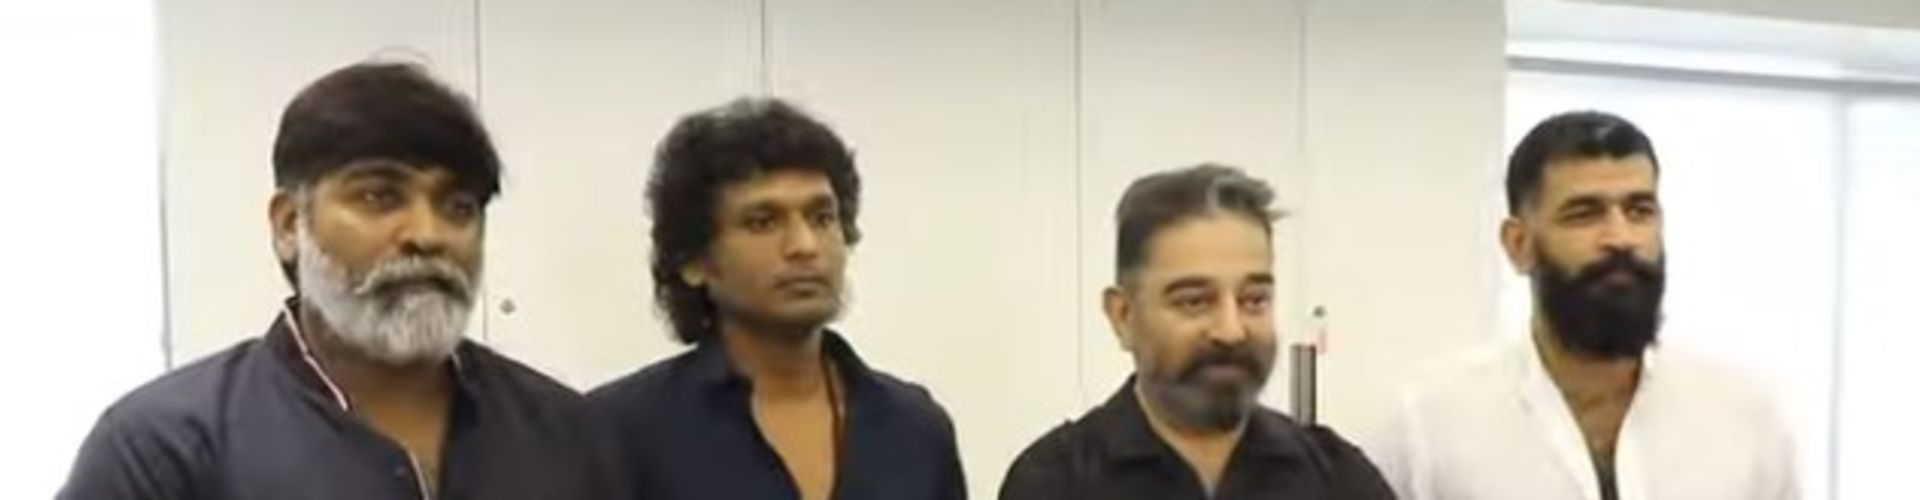 Starting Vikram, Felt Like High School Reunion Says Kamal Haasan